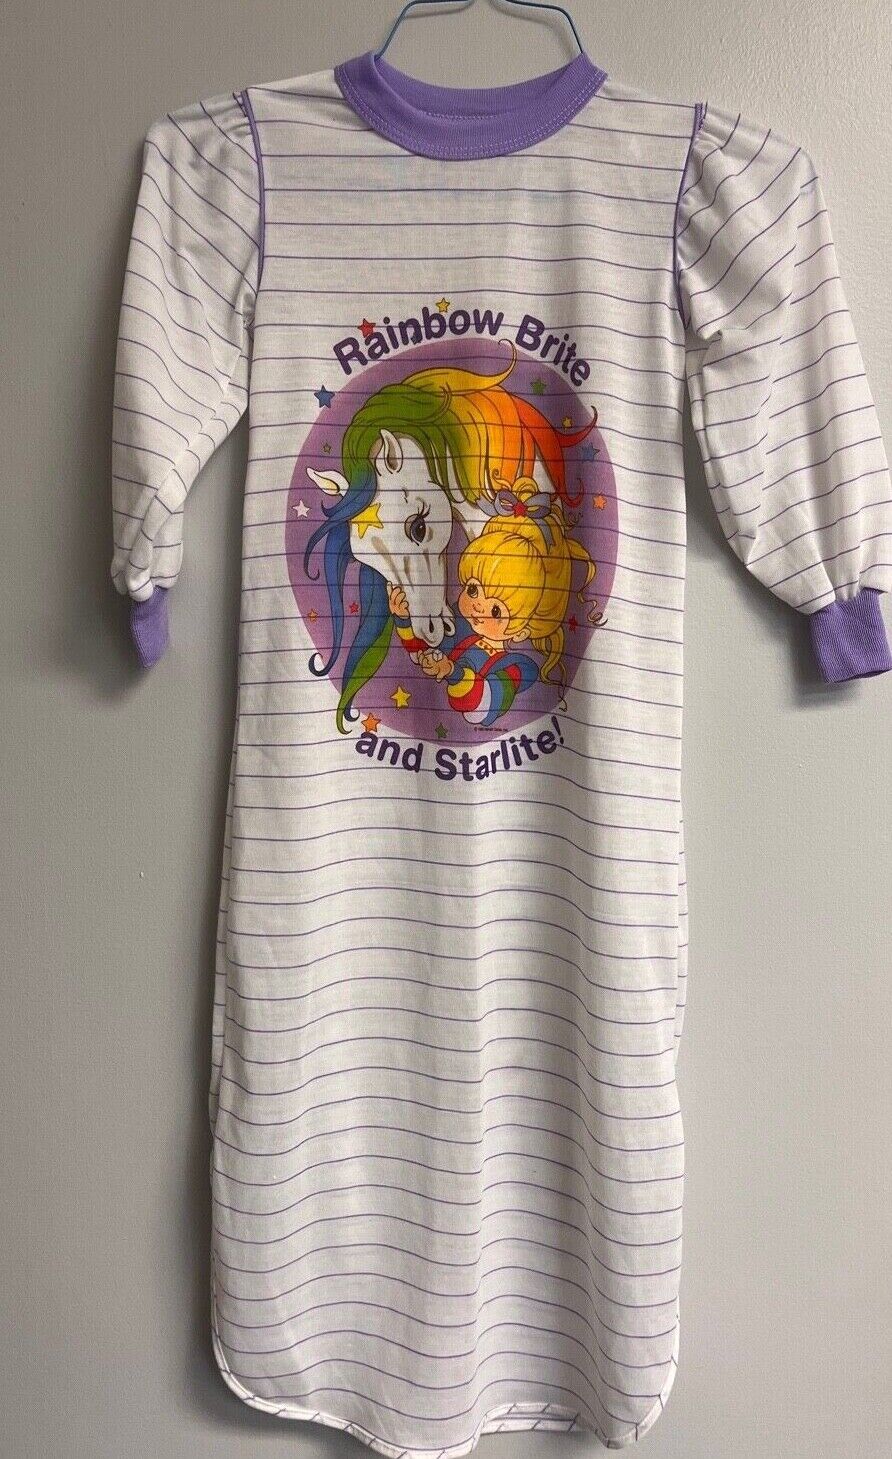 1983 Vintage Rainbowbrite Girl's Night Gown Size 6t